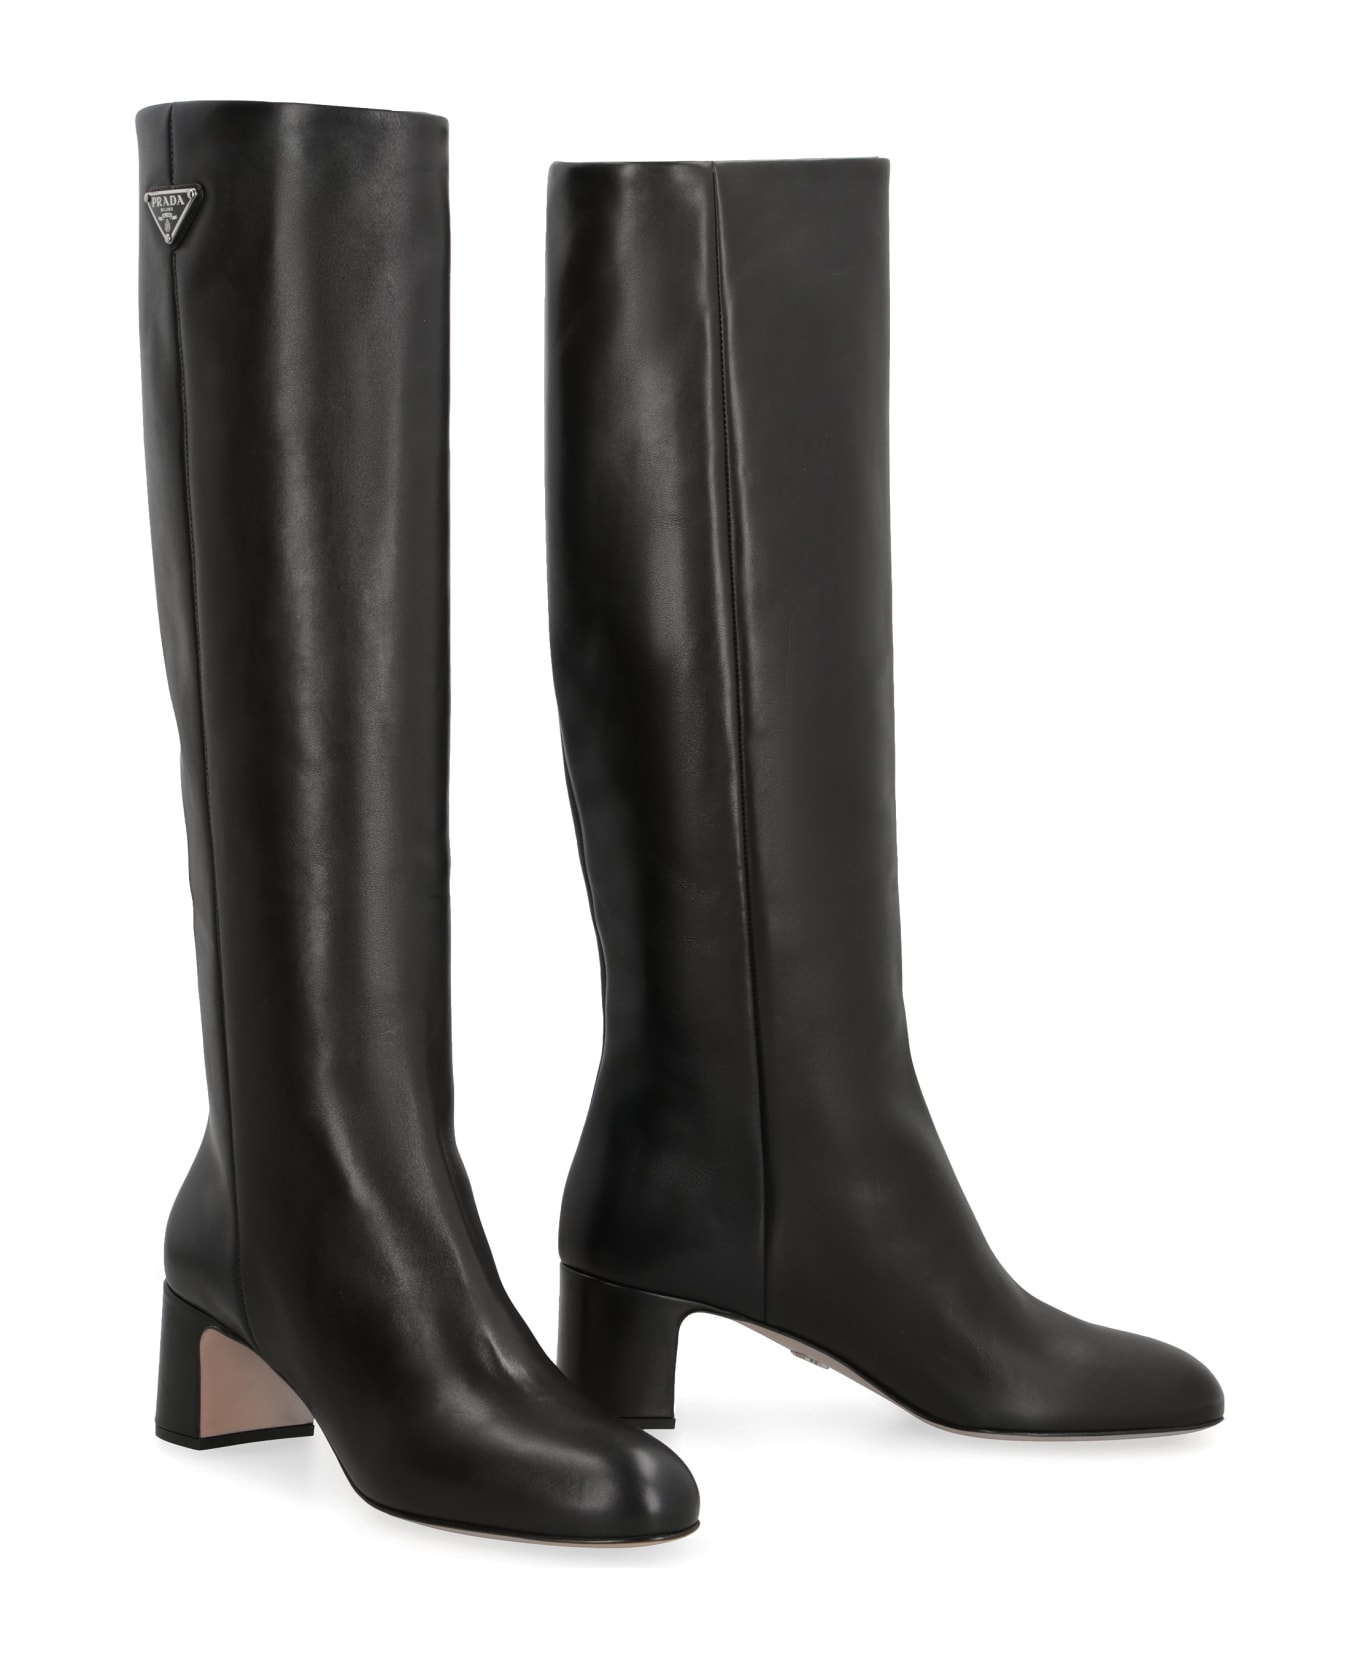 Prada Leather Boots - black